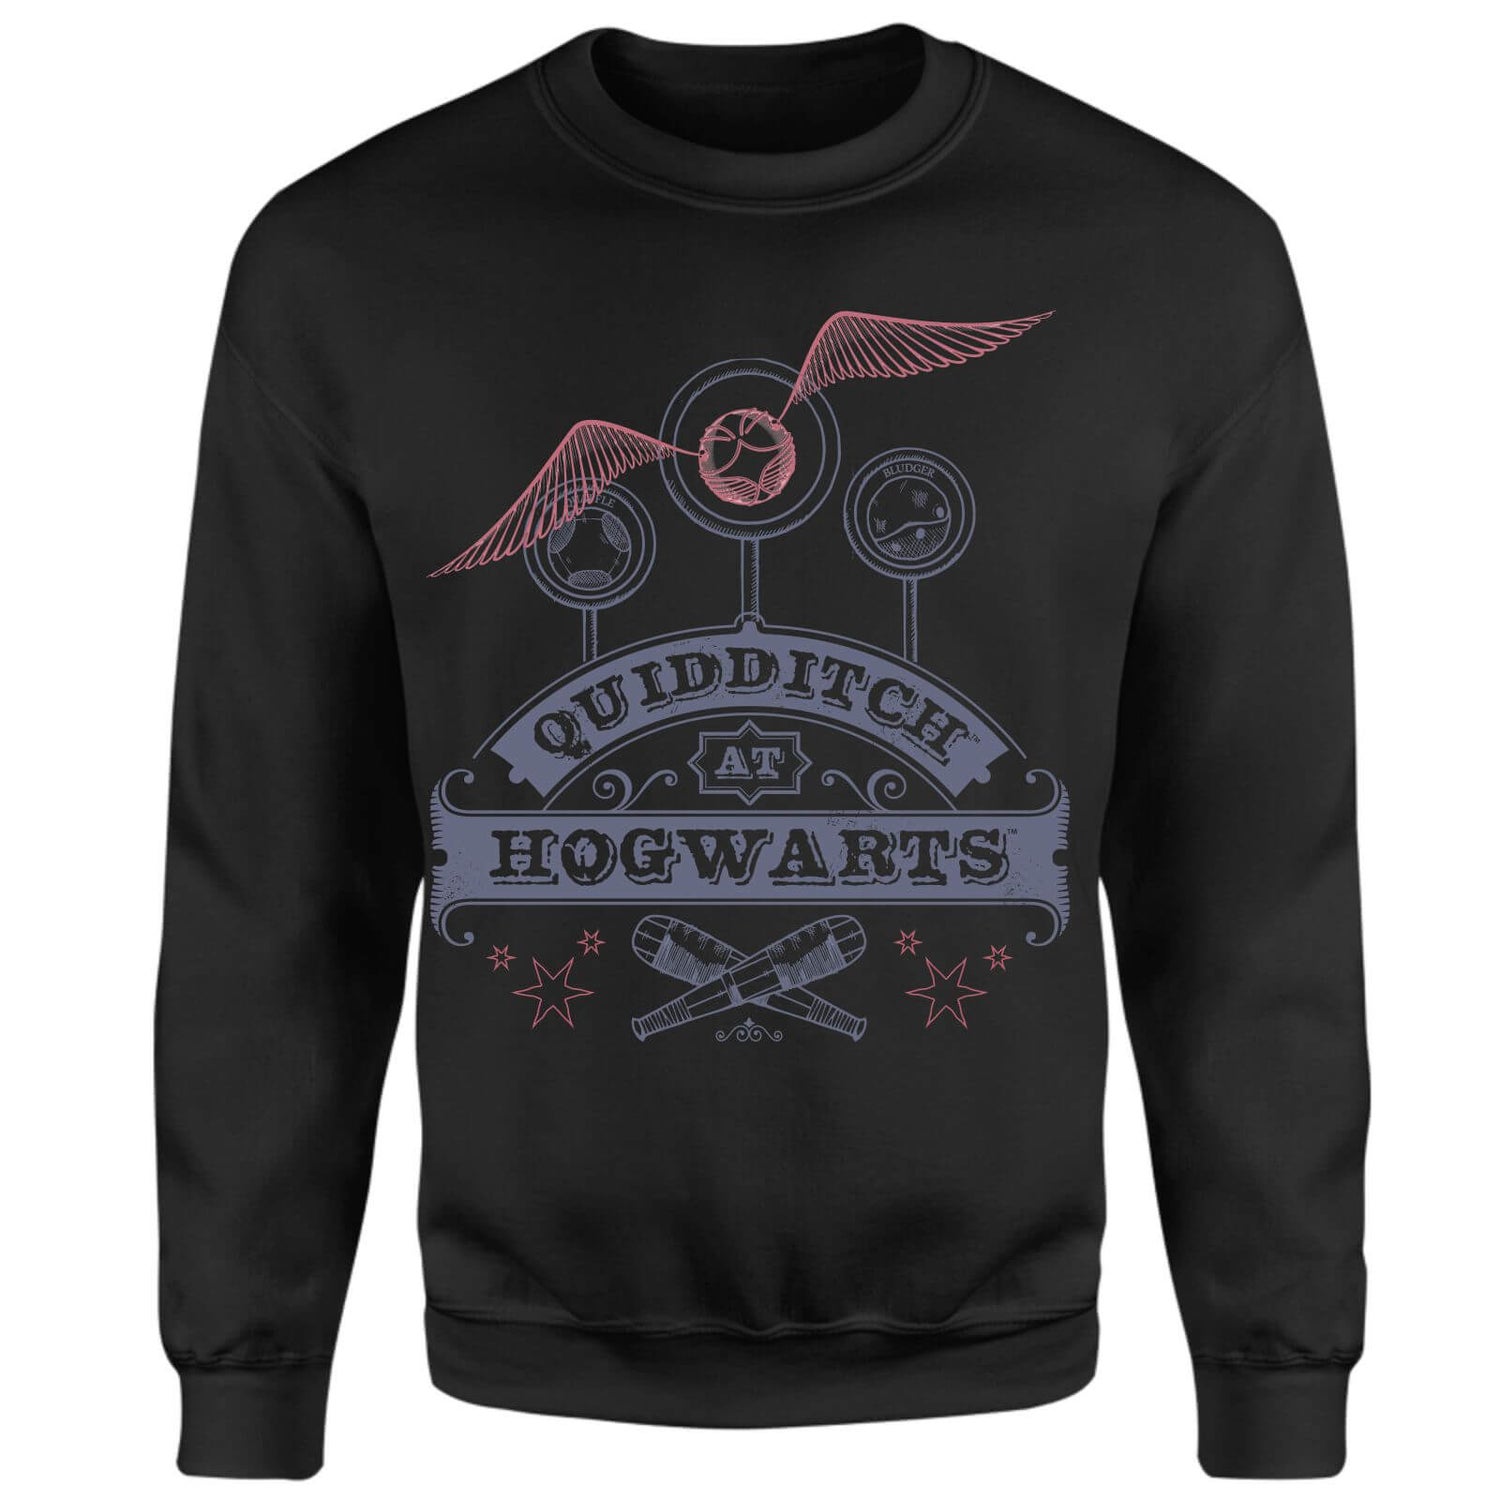 Harry Potter Quidditch At Hogwarts Sweatshirt - Black